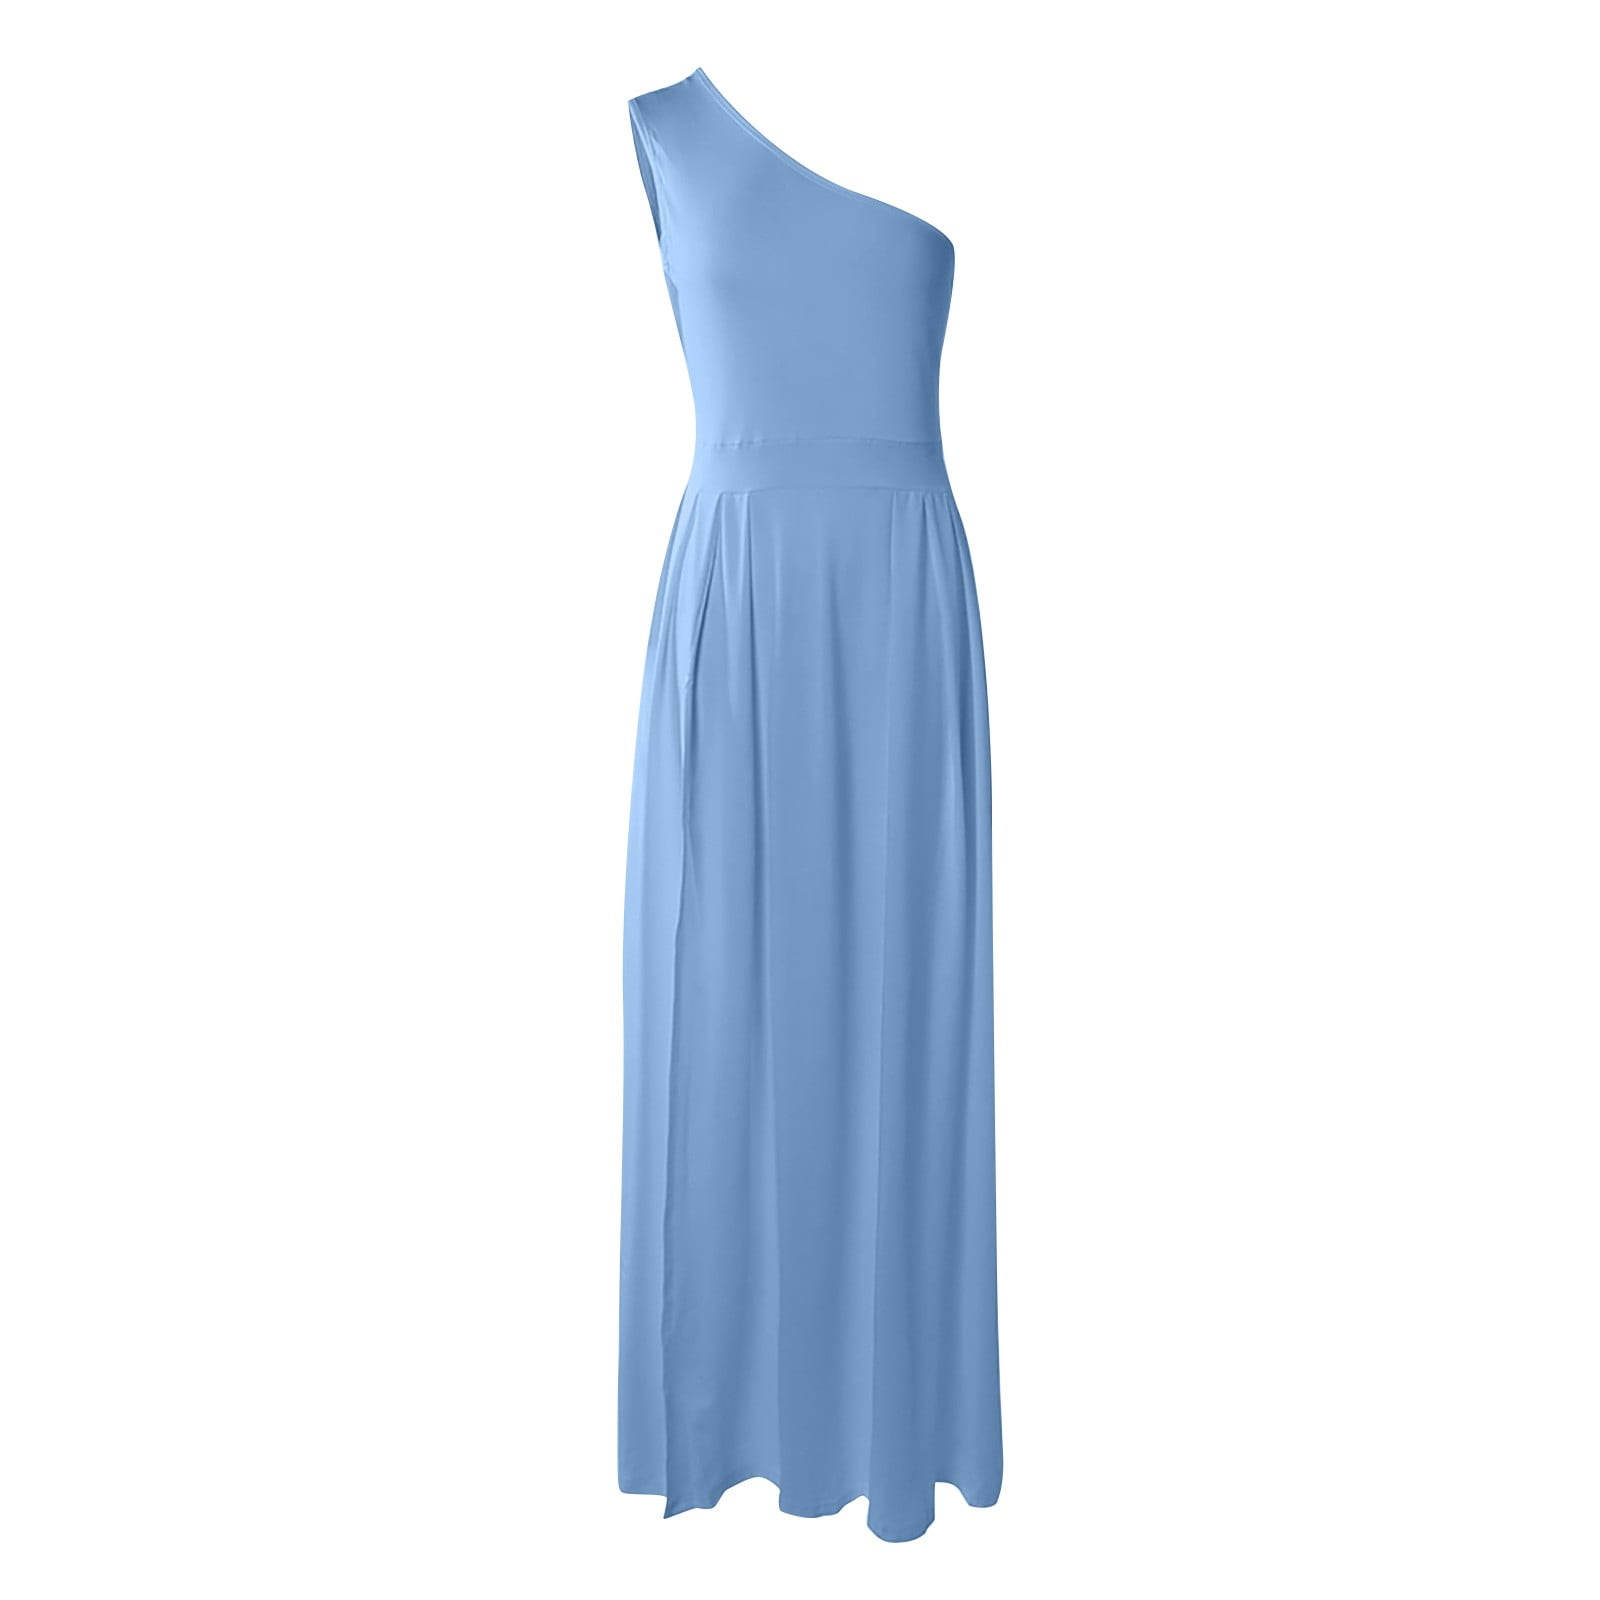 Sleeveless casual dress Farfetch Clothing Dresses Casual Dresses Blue 